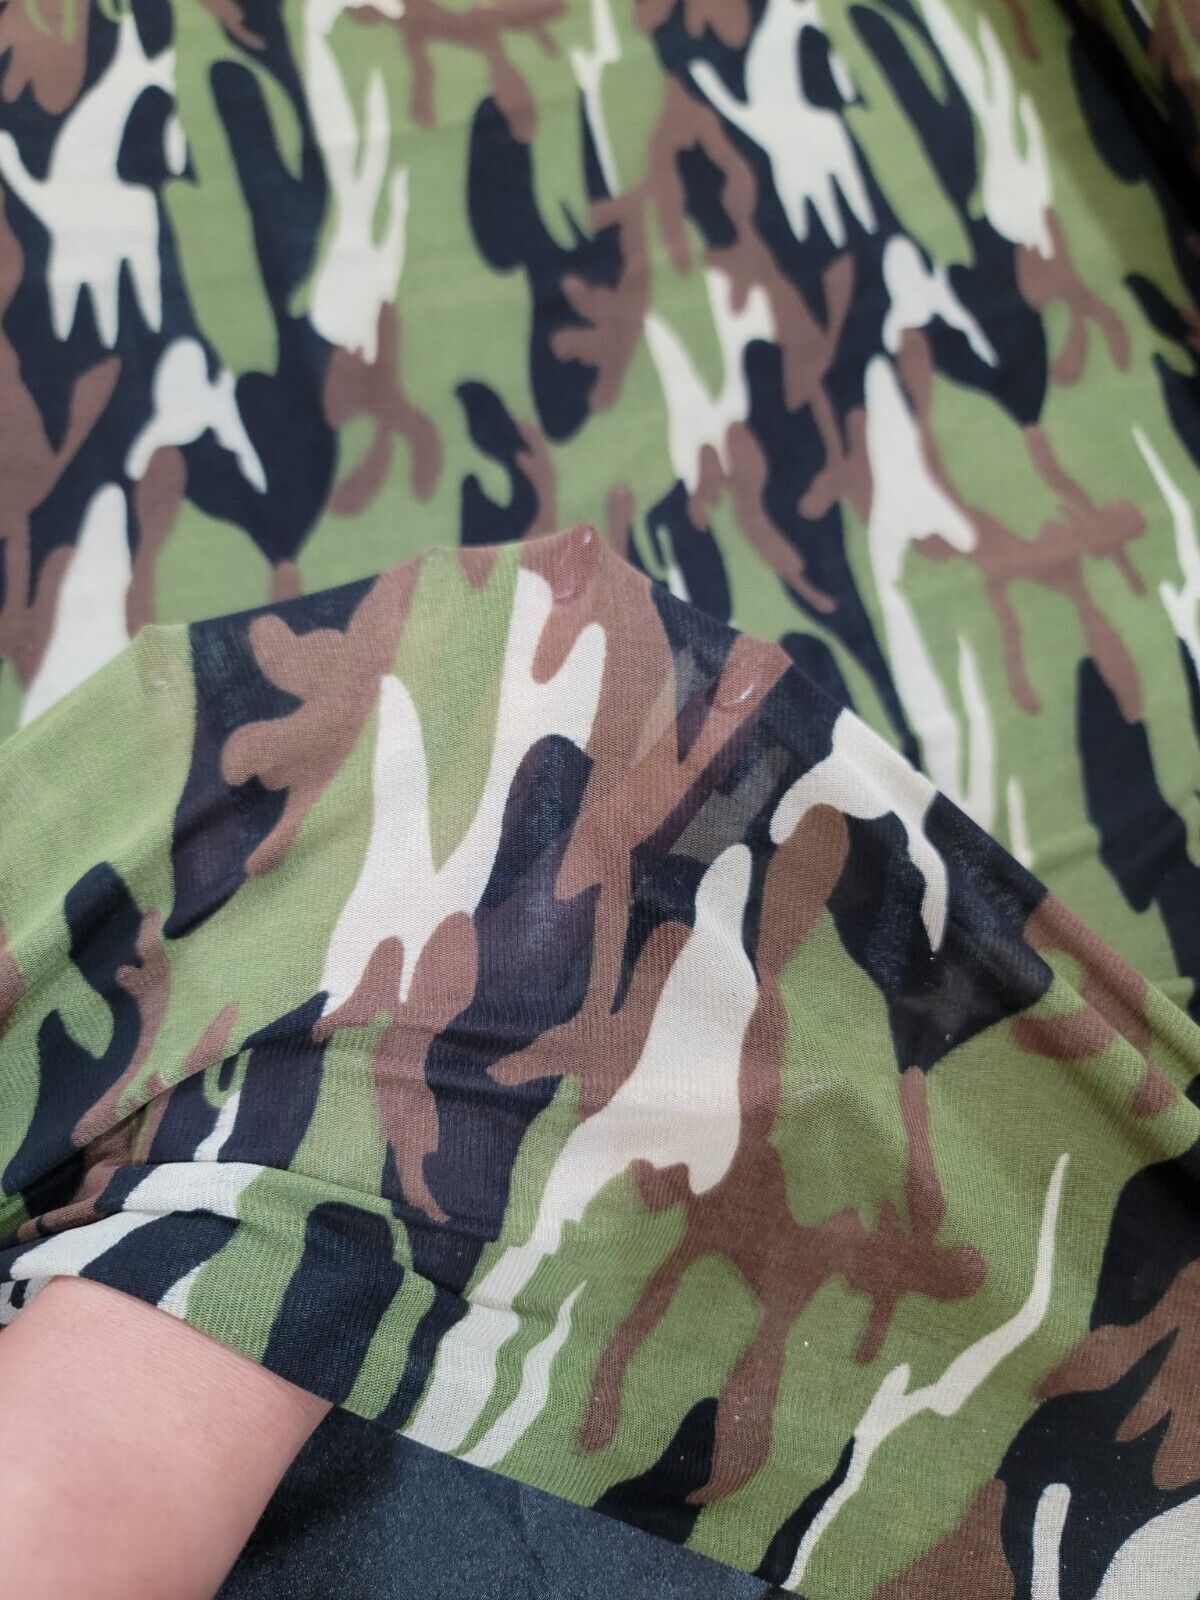 Military Camouflage Print 4 way Stretch Fabric 60"wide Sportwear Mesh By Yard